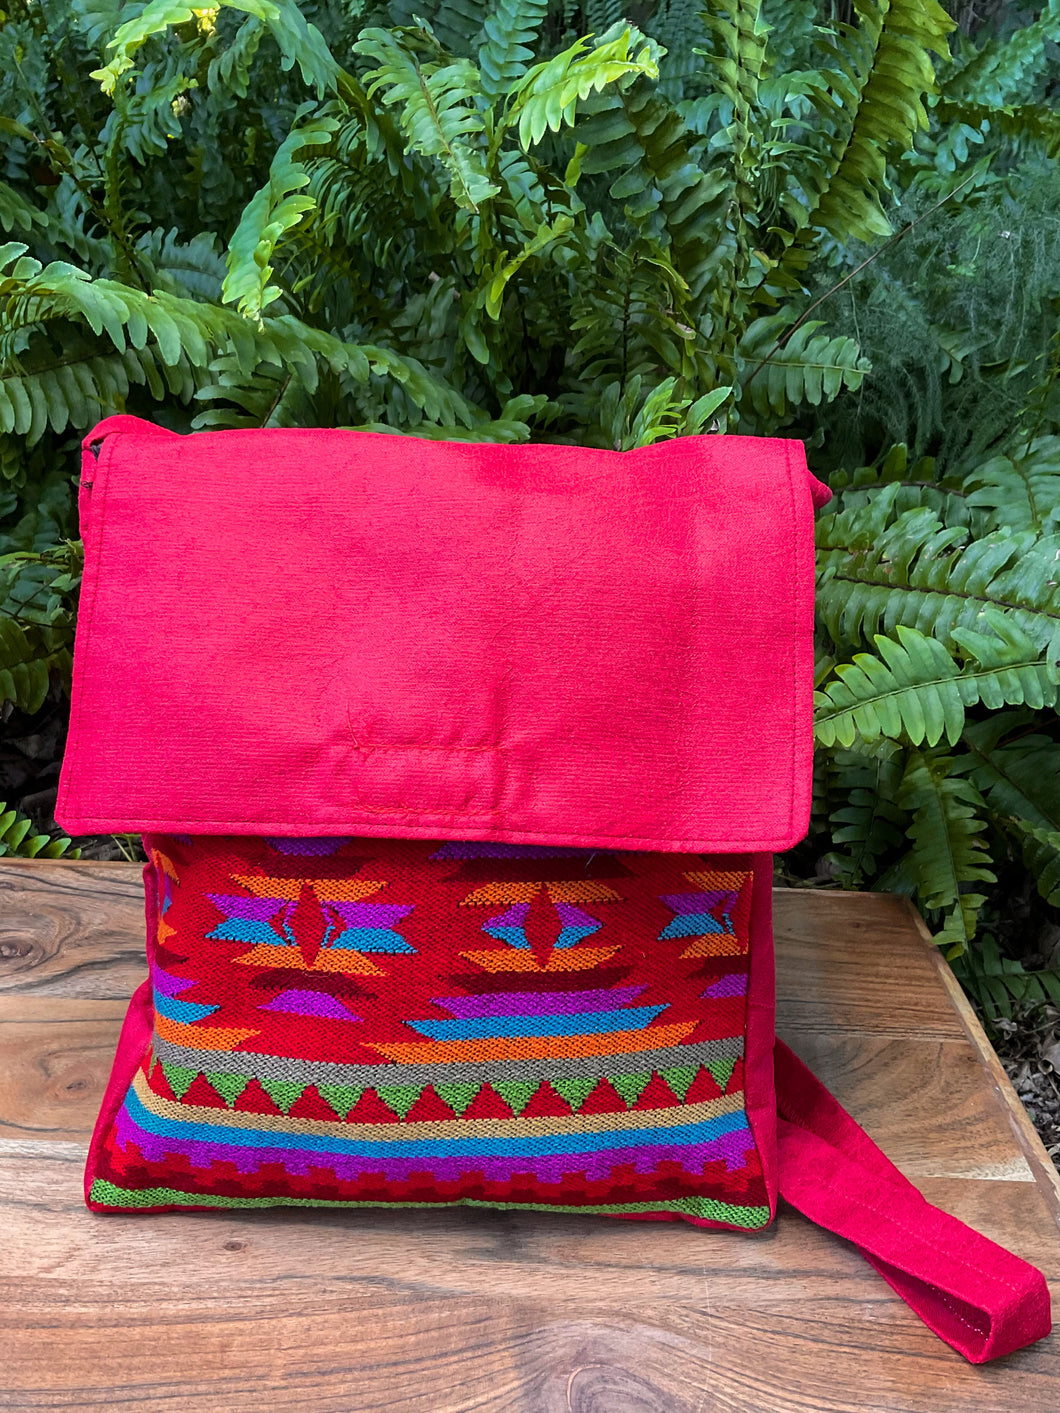 Embroidered Unisex Messenger Bag - Red